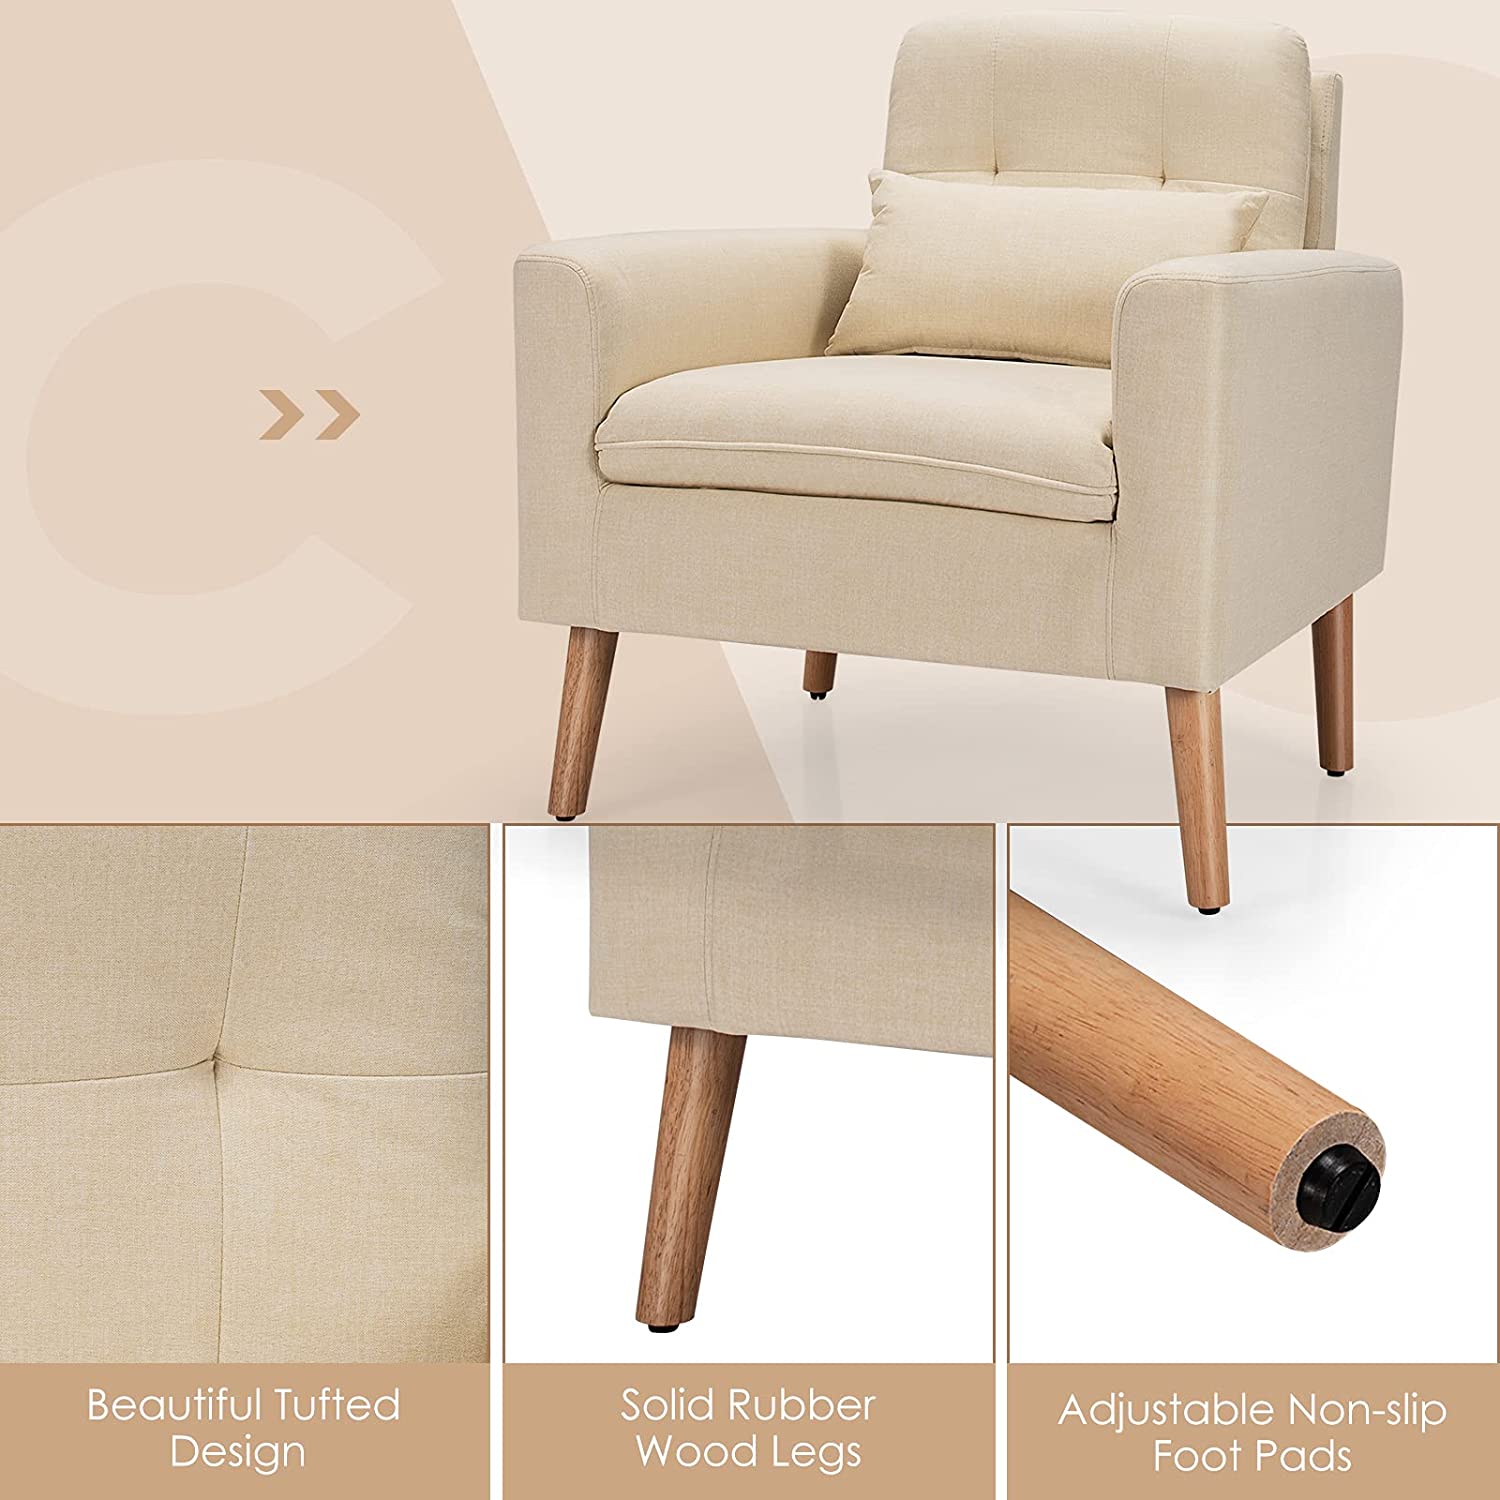 Giantex Modern Leisure Chair for Living Room Bedroom Office